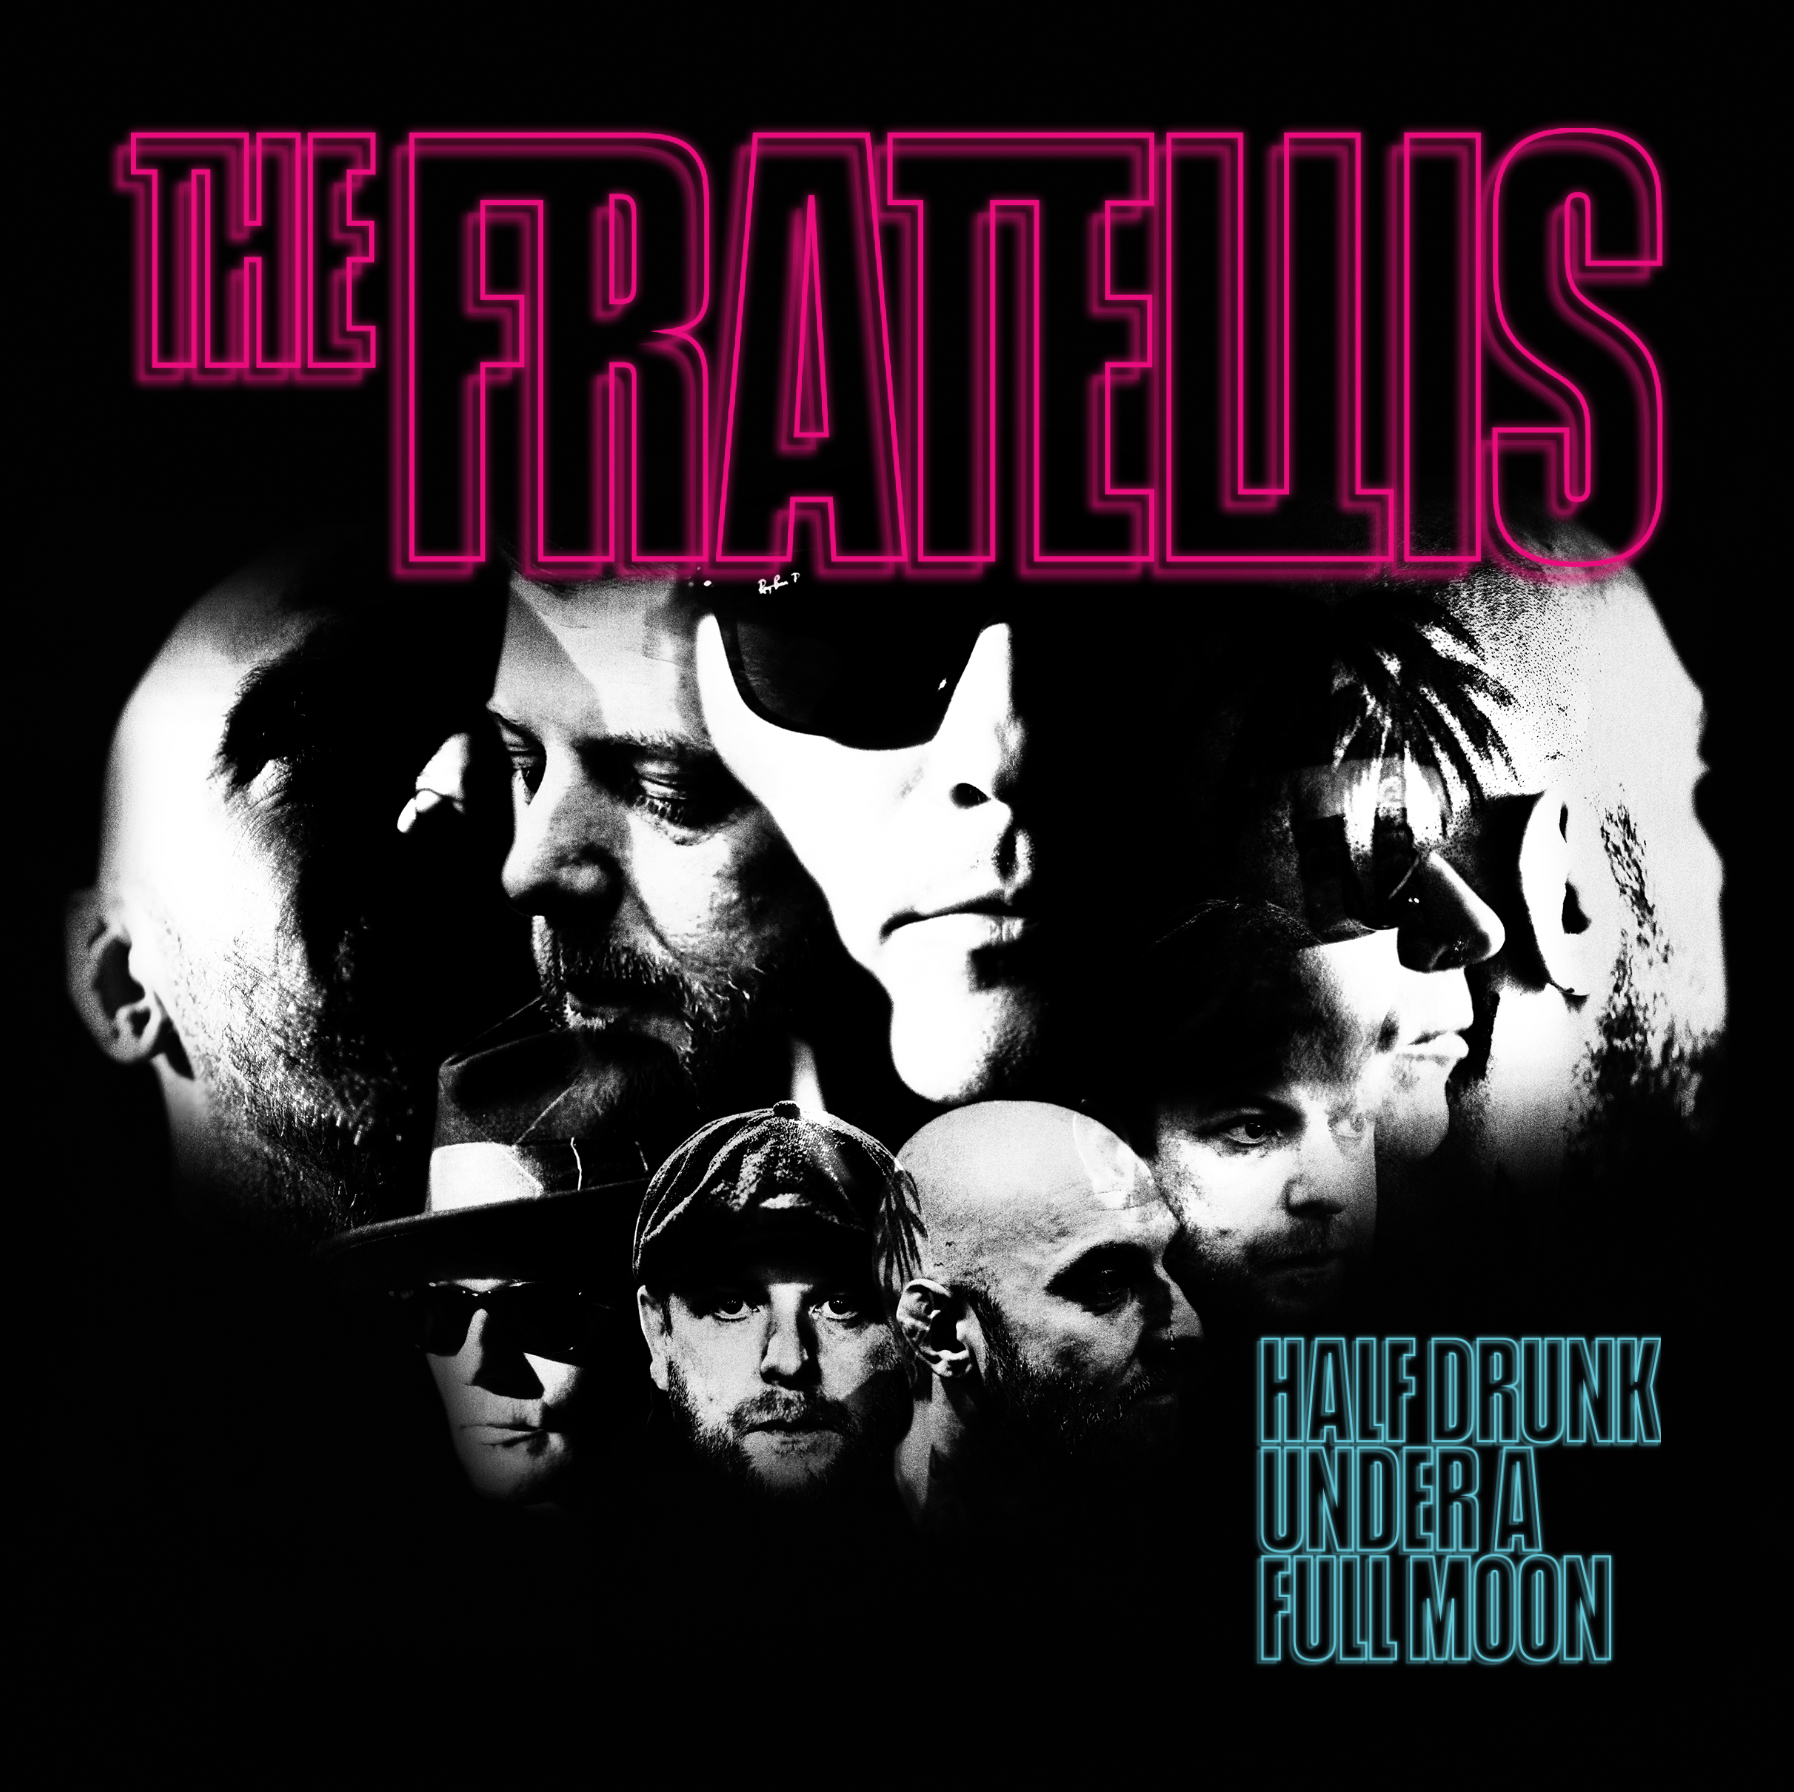 The Fratellis - Half Drunk Under a Full Moon - CD